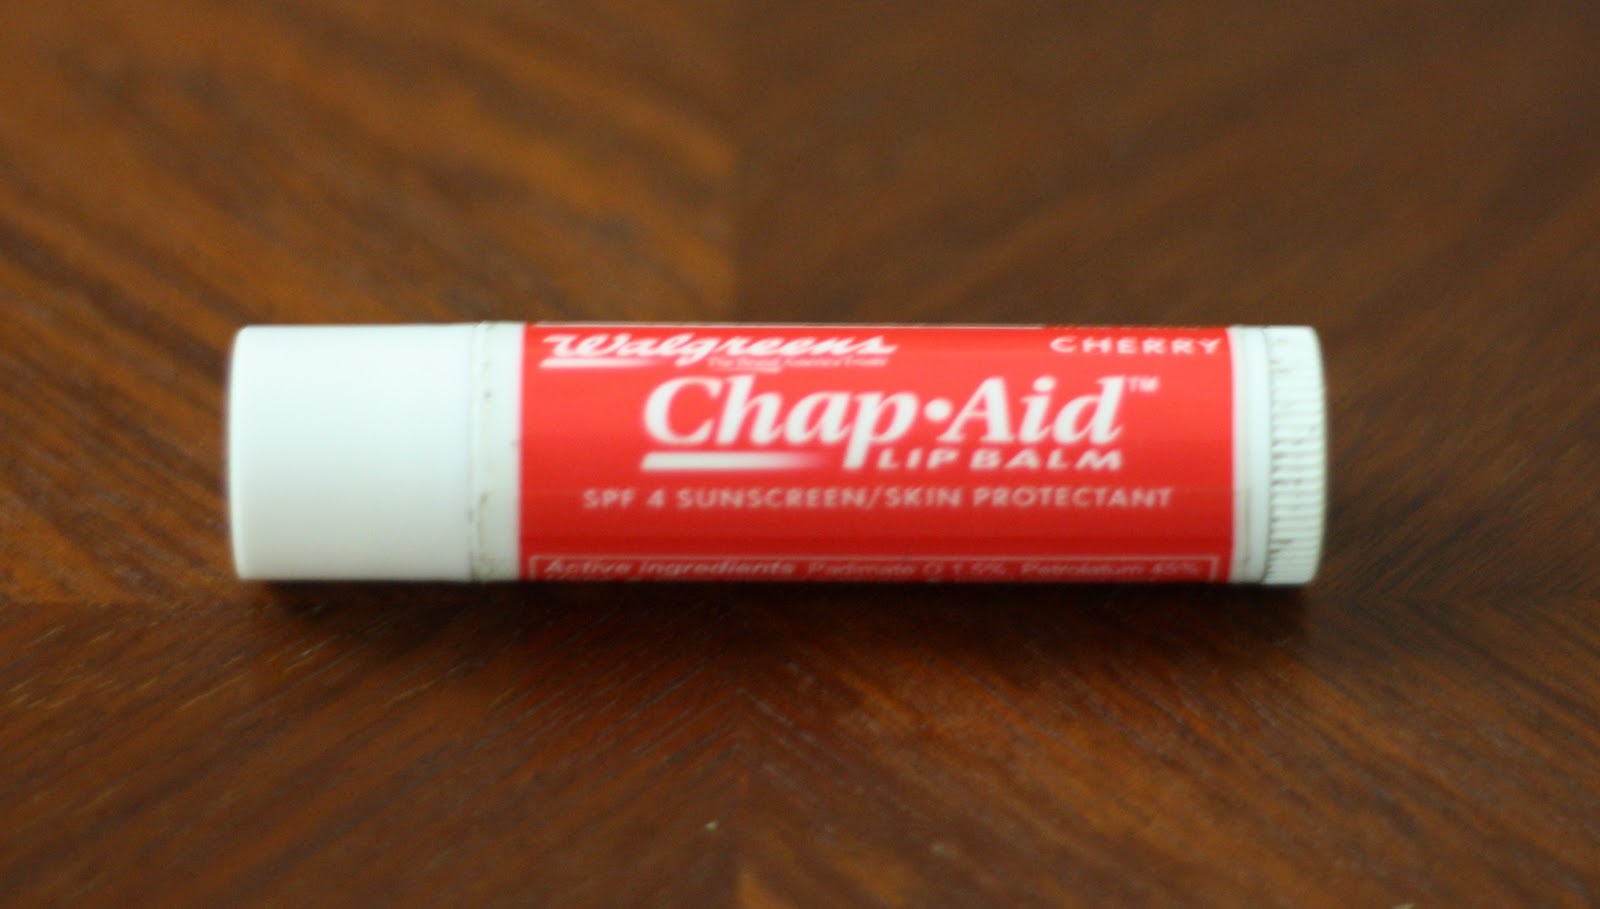 Walgreens Chap-Aid Lip Balm Review (Cherry & Moisturizer) • Magali Vaz |  Fashion, Lifestyle & Travel Blog